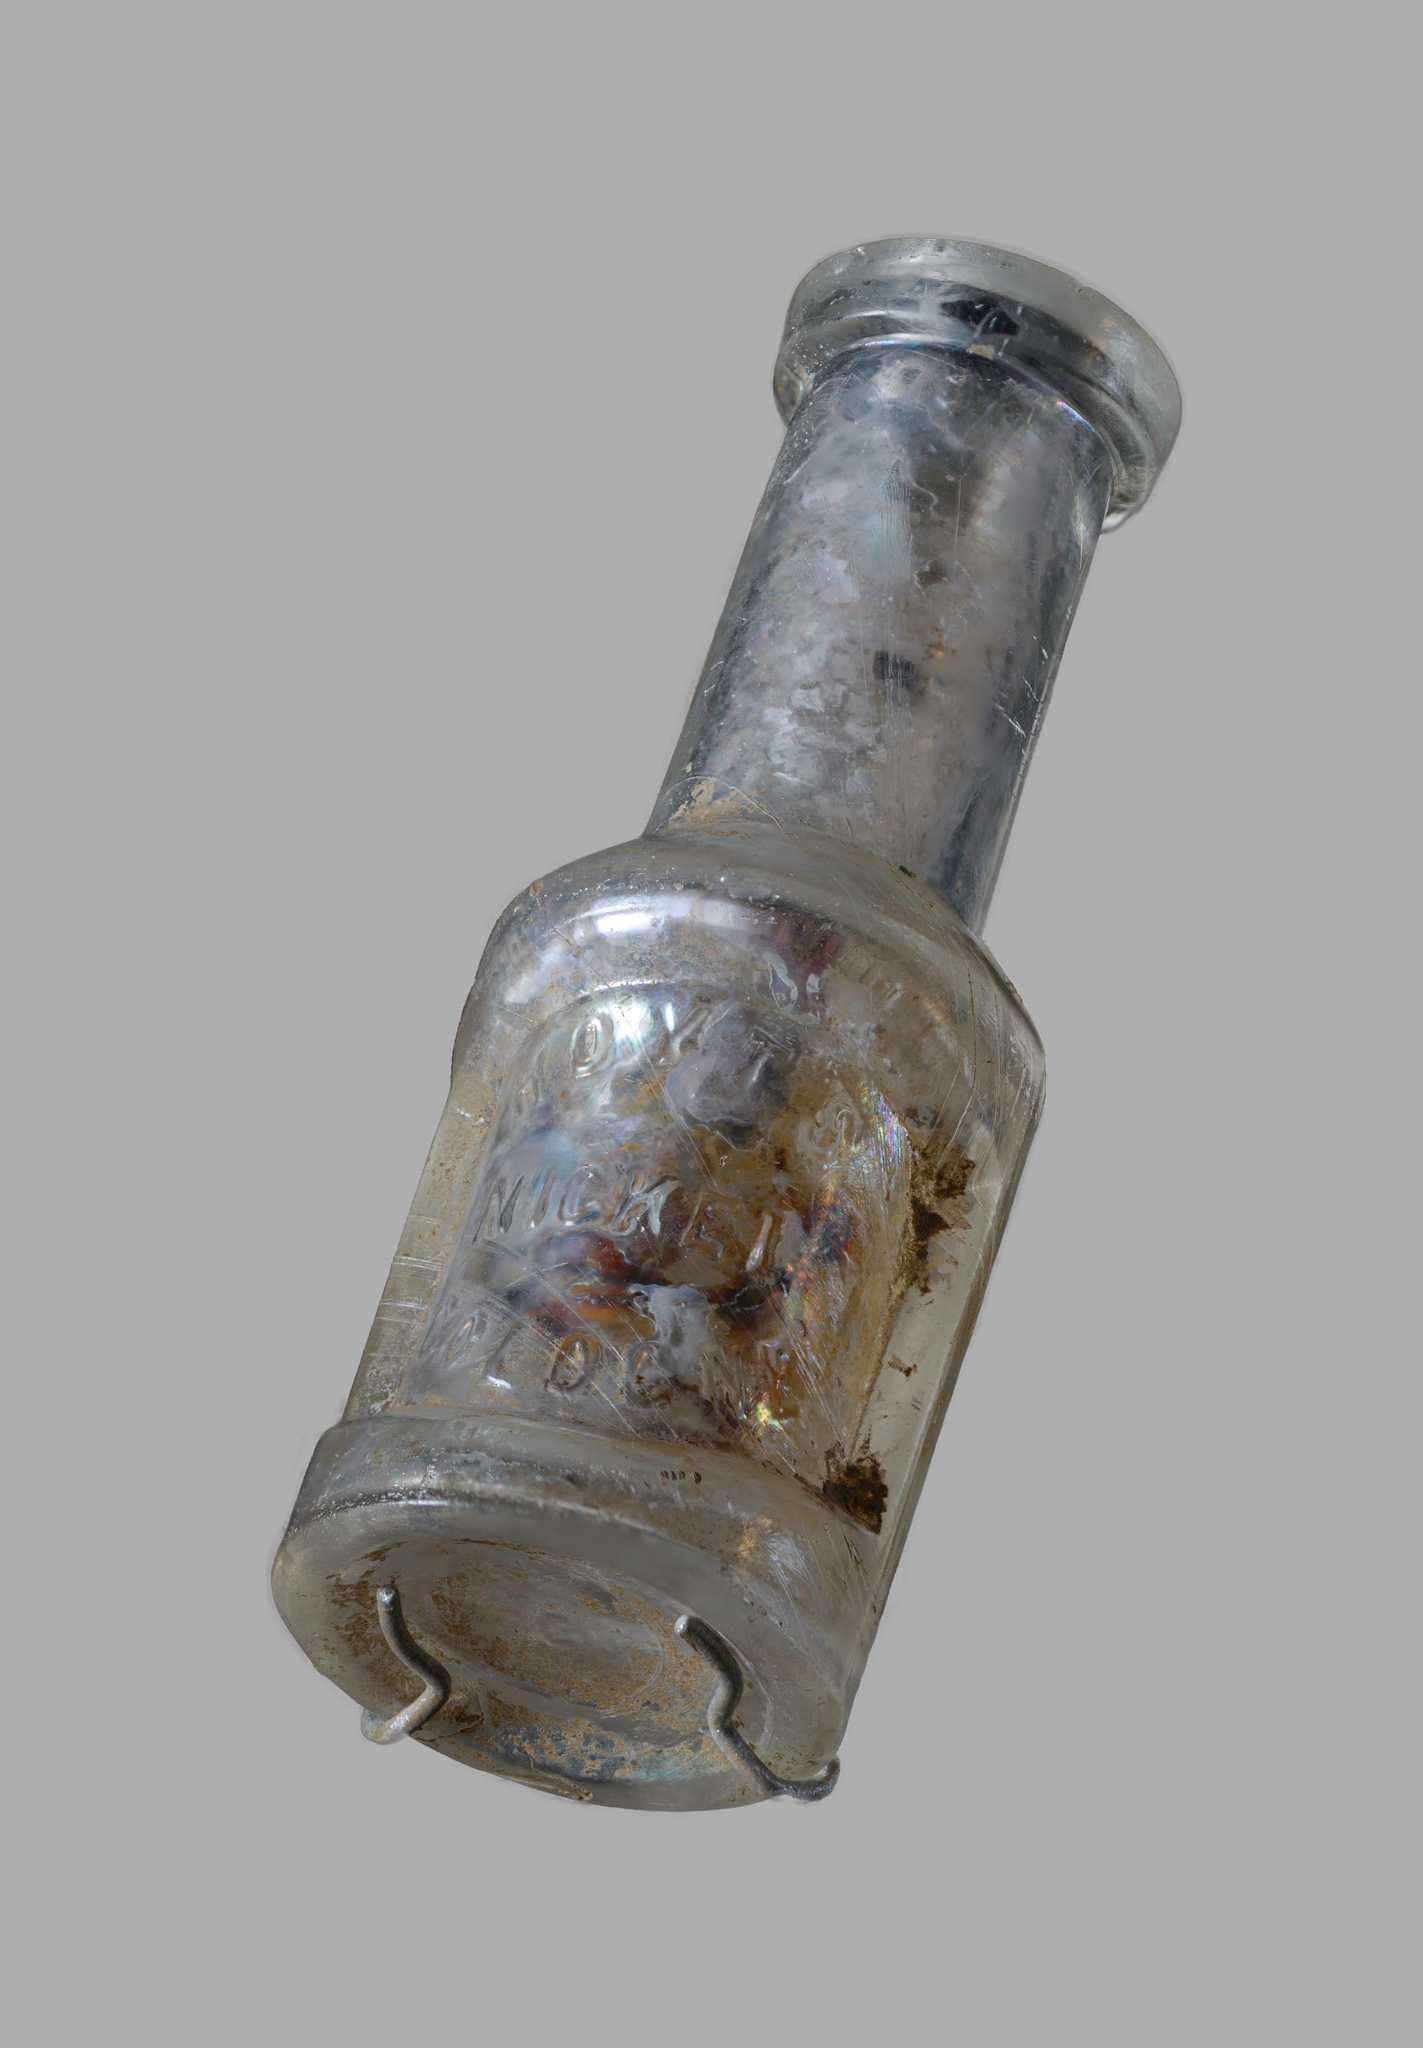 Photograph of a medicine bottle